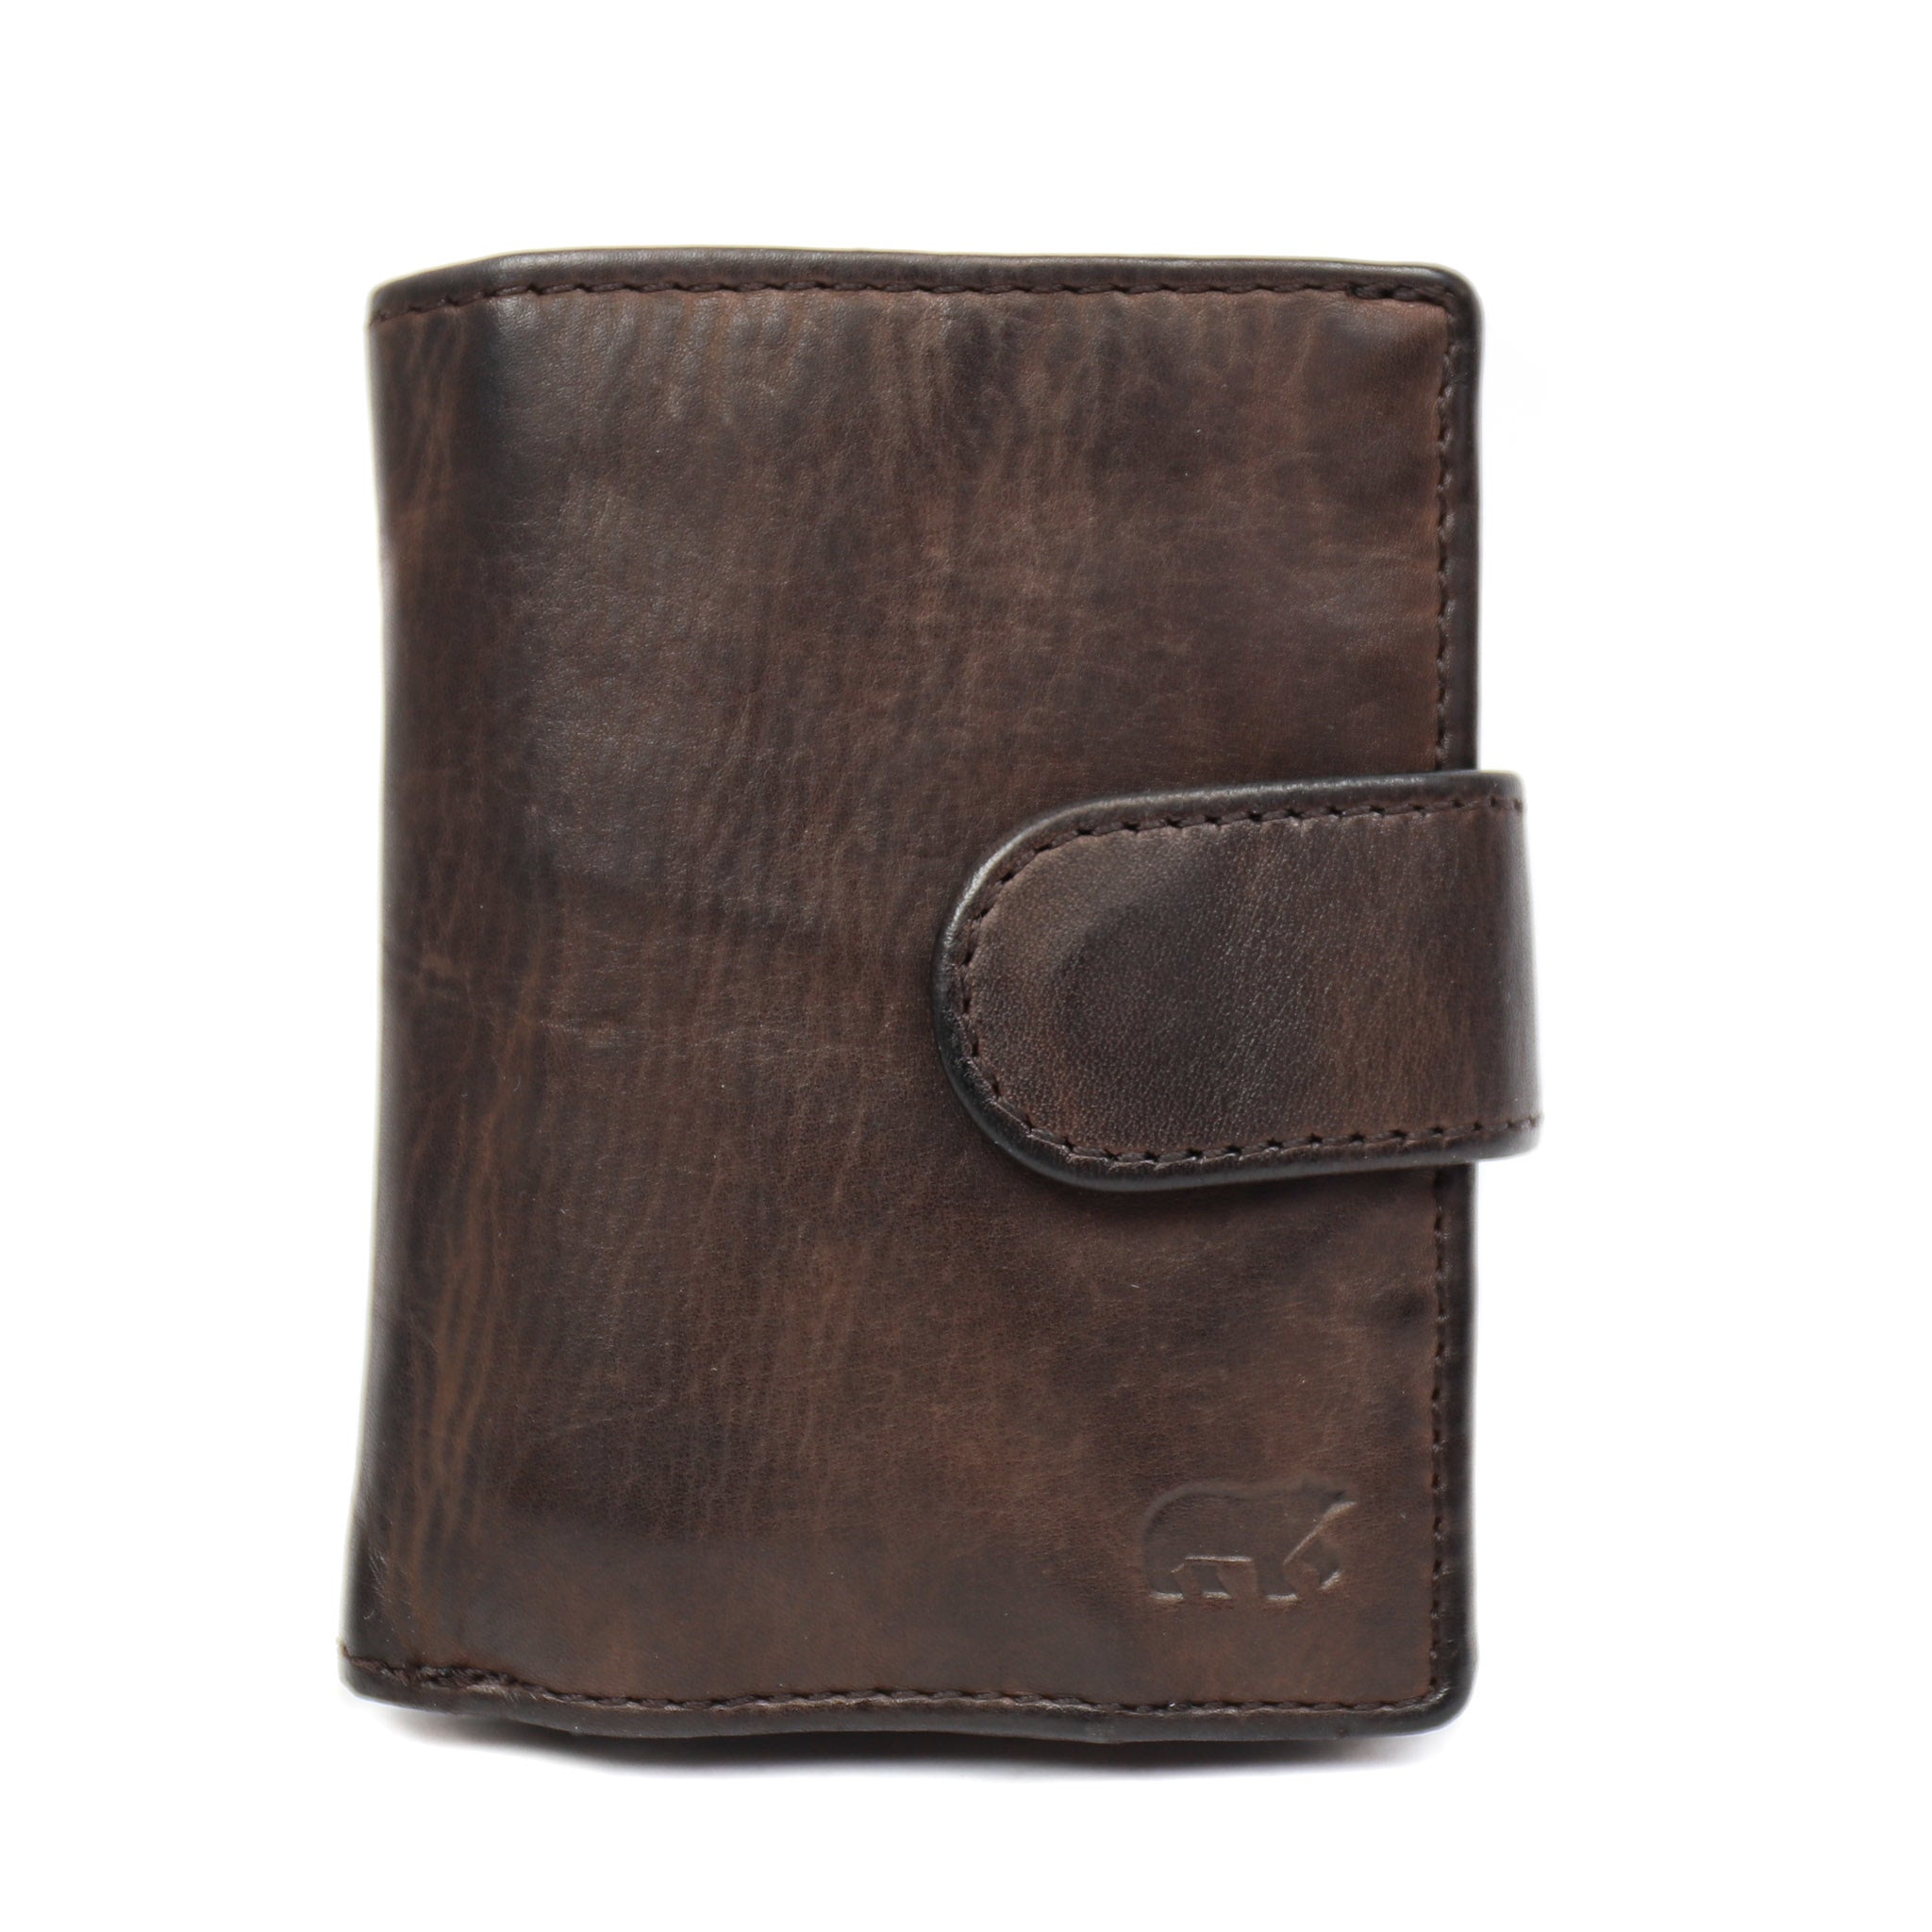 Card holder 'Kris' dark brown - CL 15253